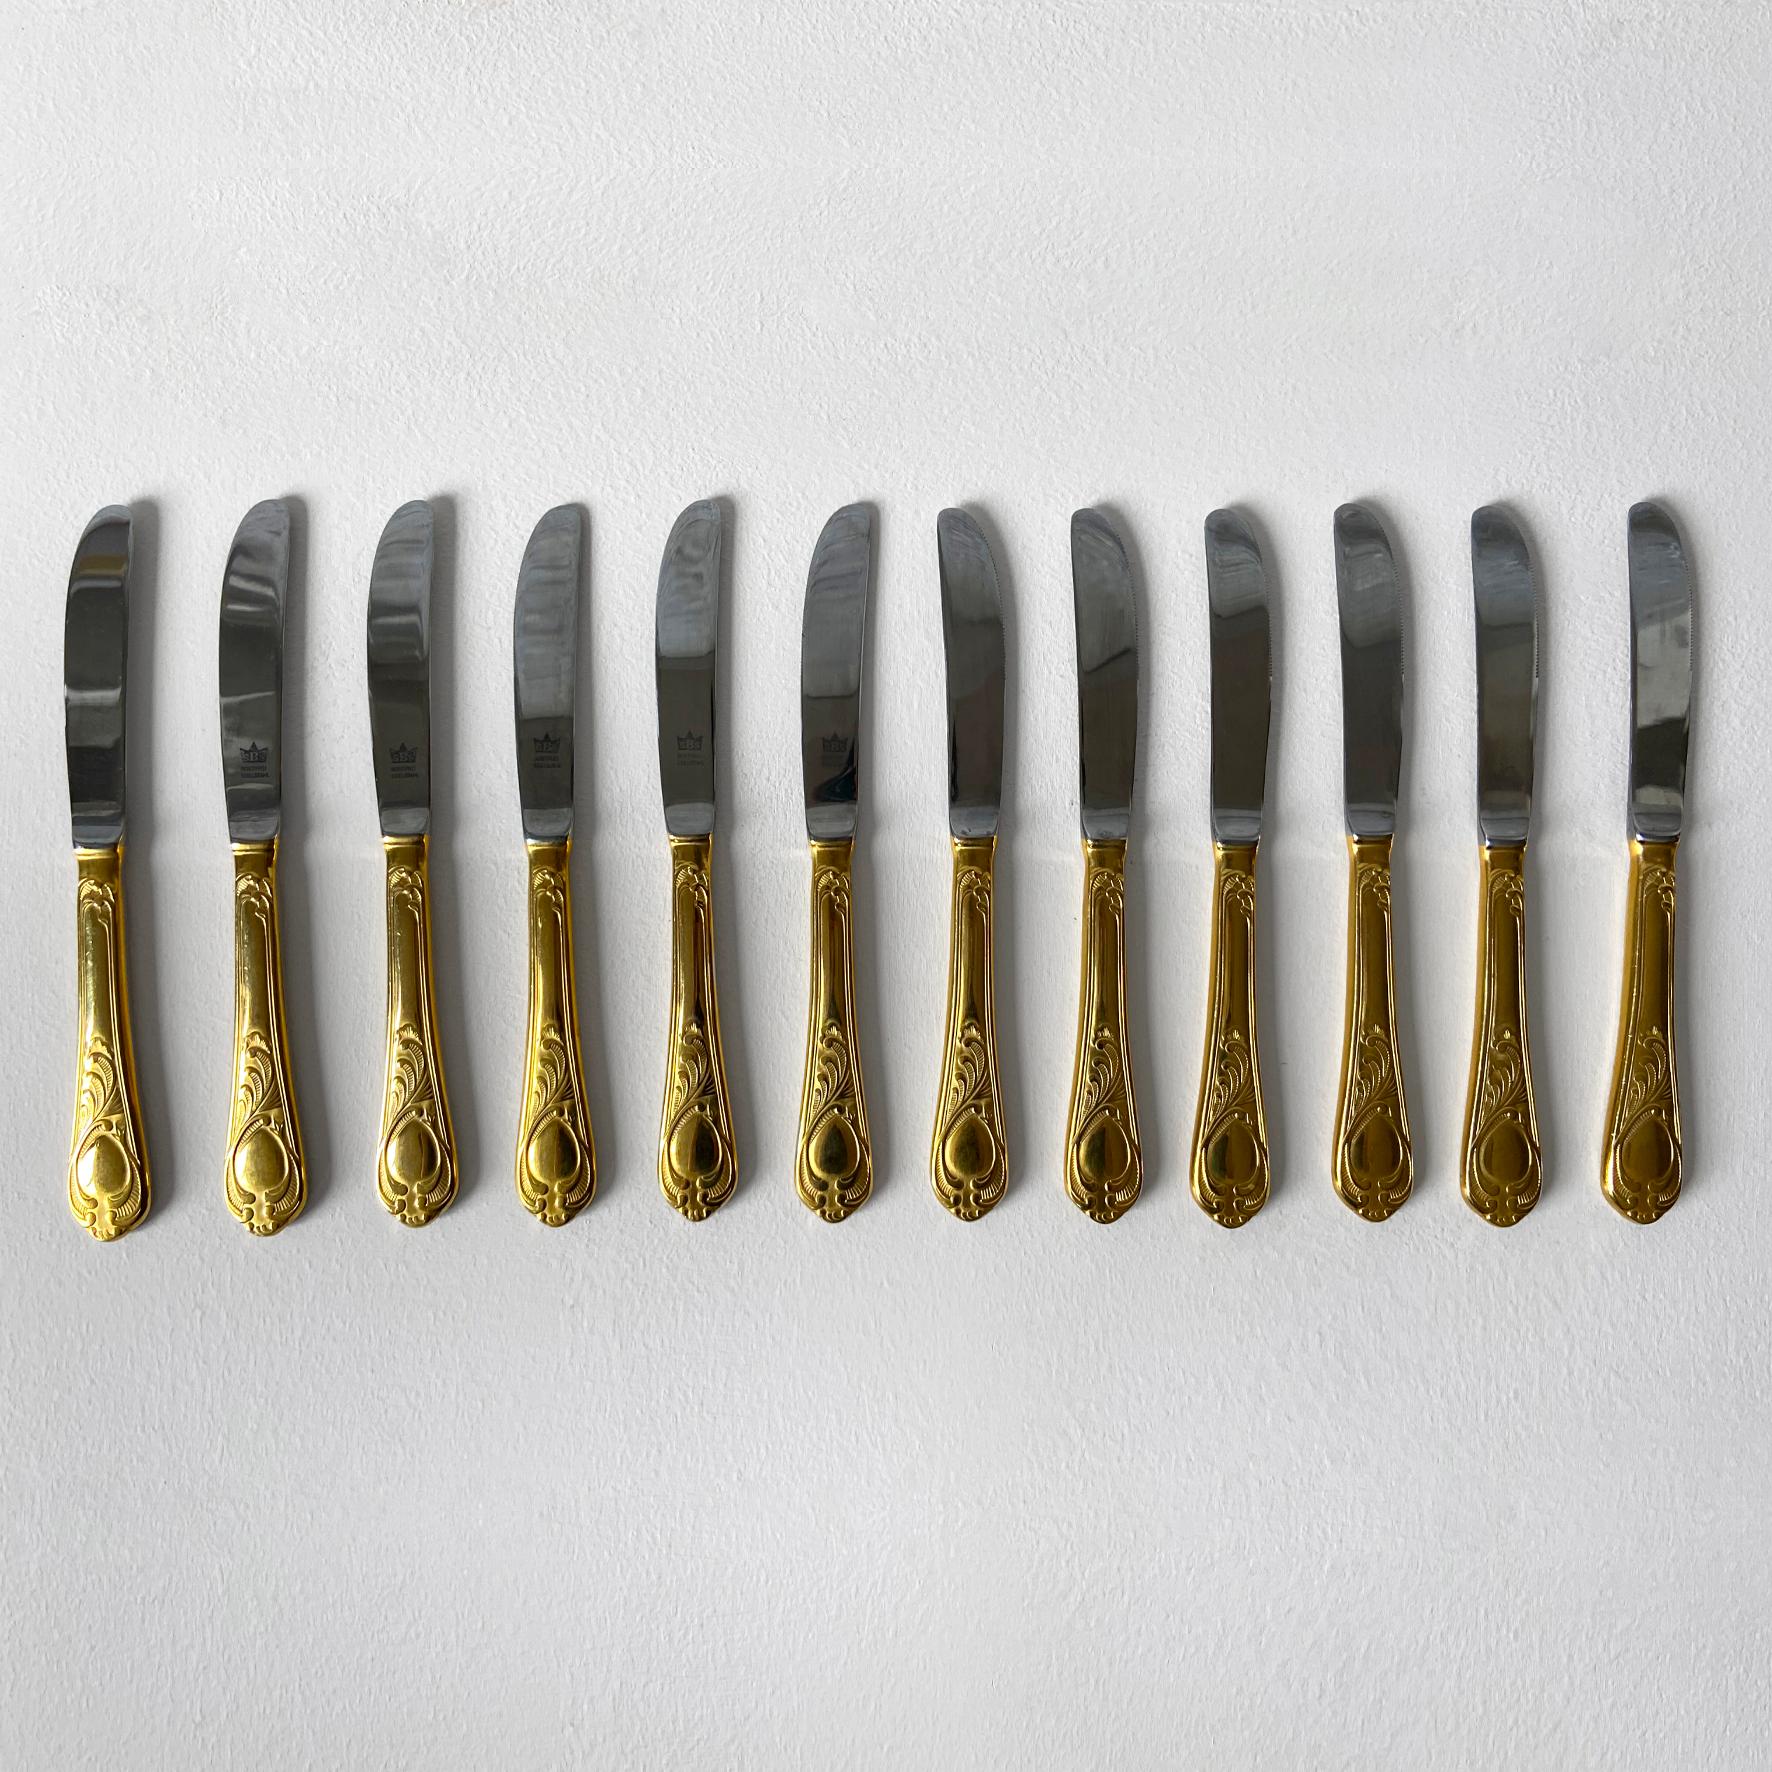 Rococo Bestecke Solingen German 23/24 Karat Gold-Plated 70pcs / 12 Person Cutlery Set For Sale